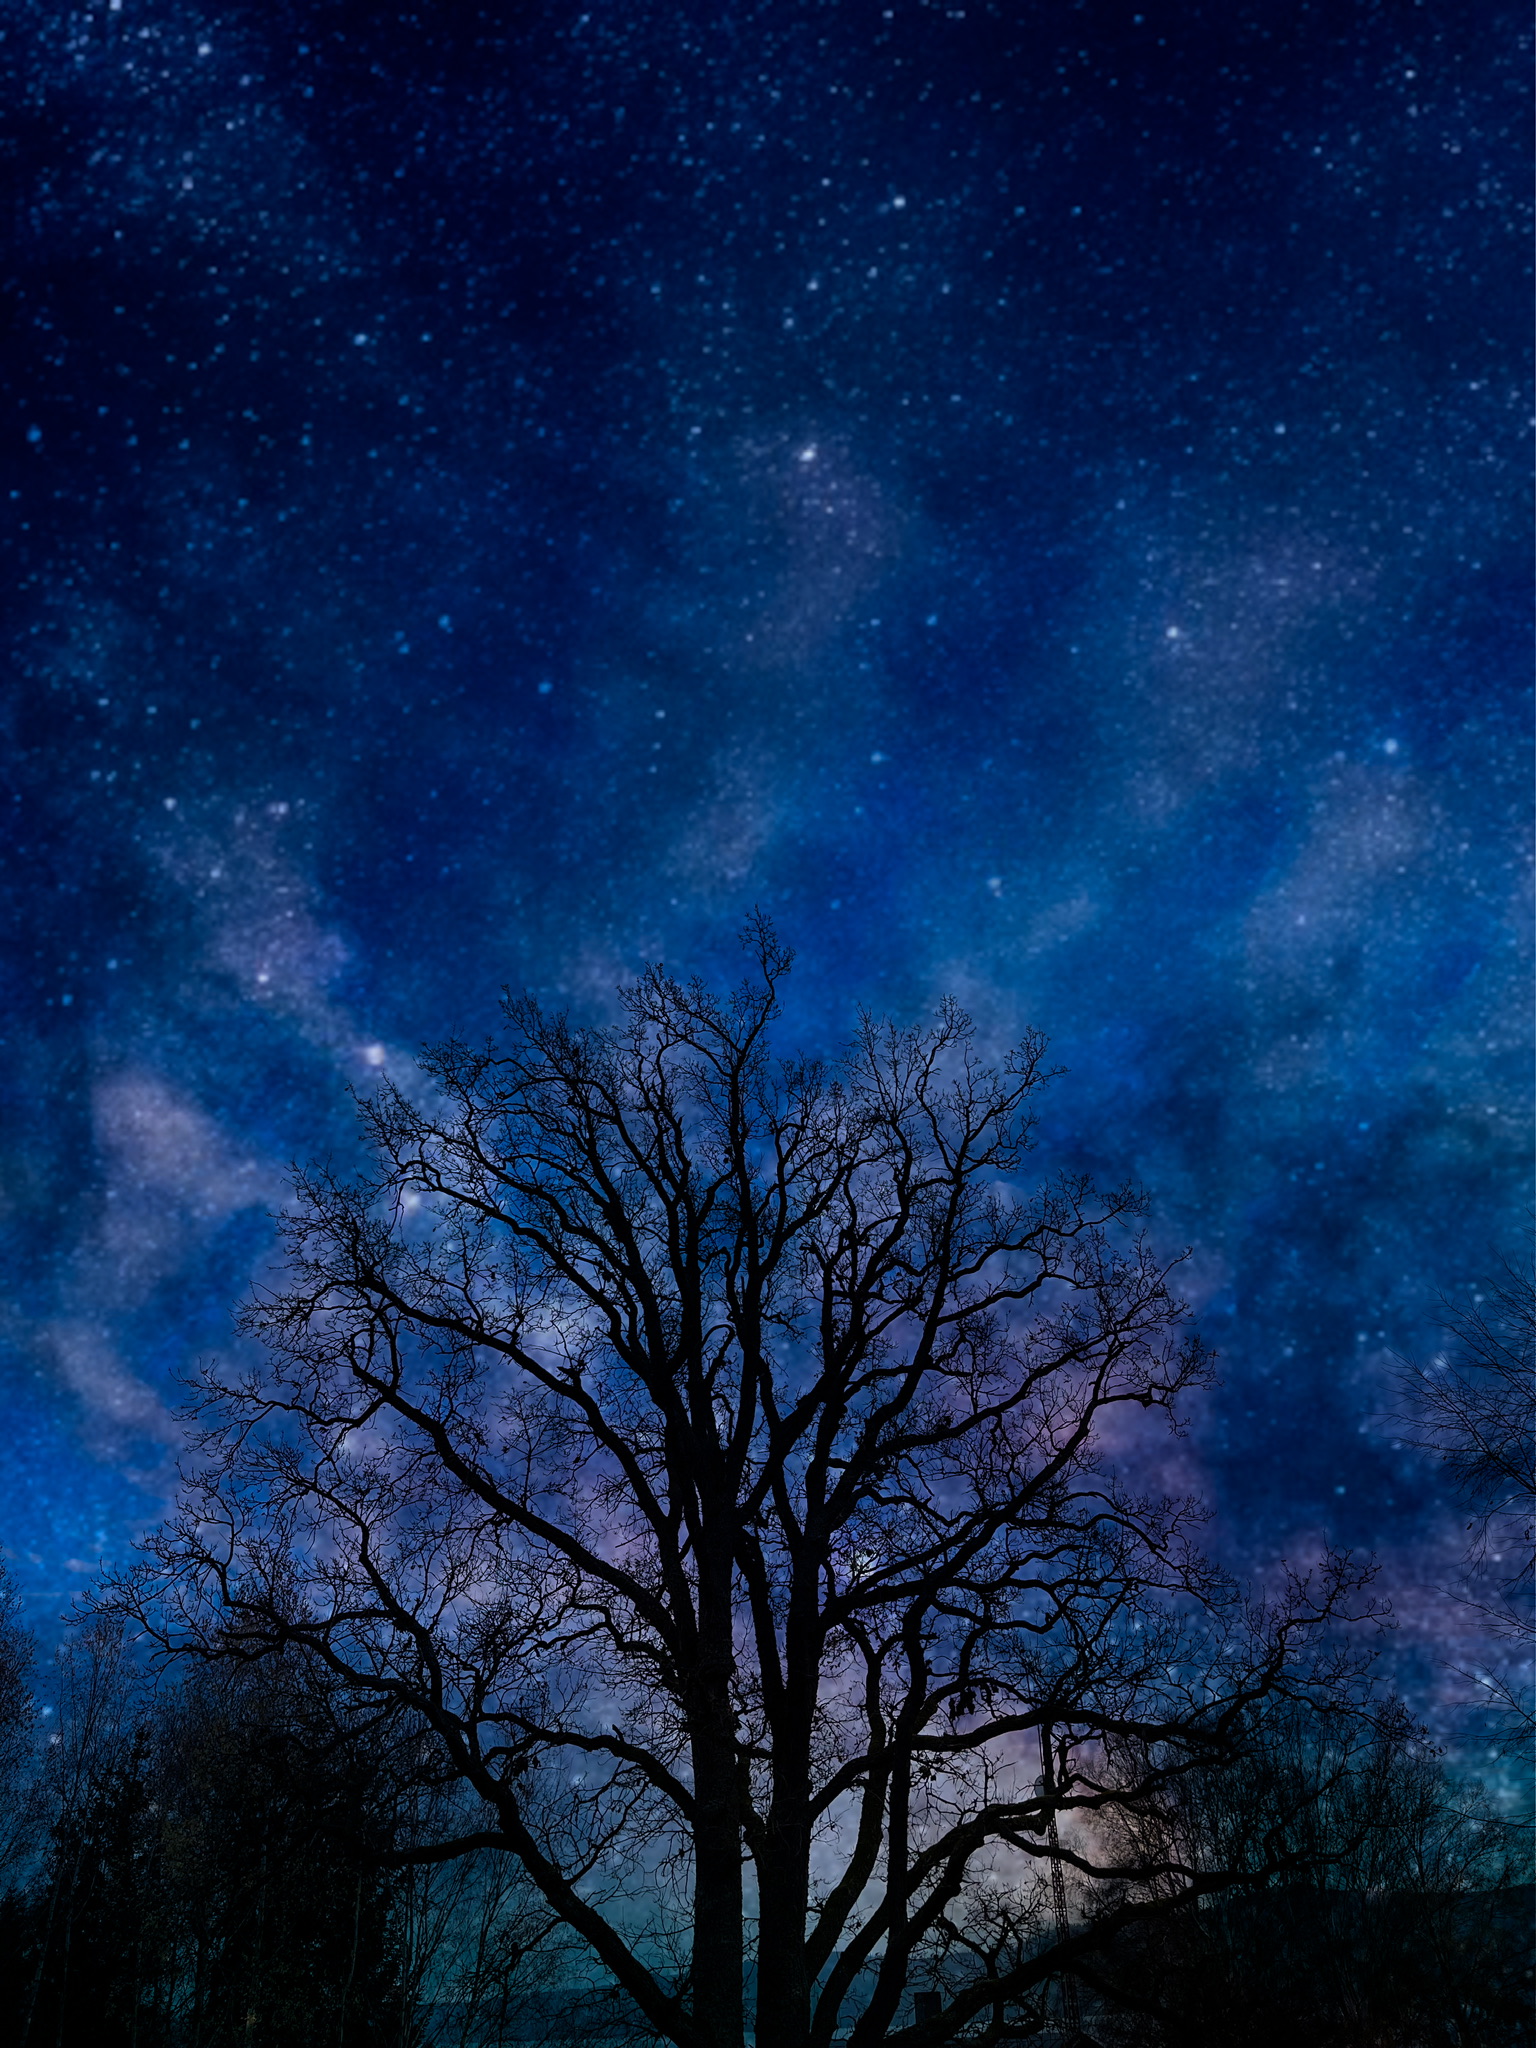 Cloudzzz #4 Cosmic Energy Tree Night